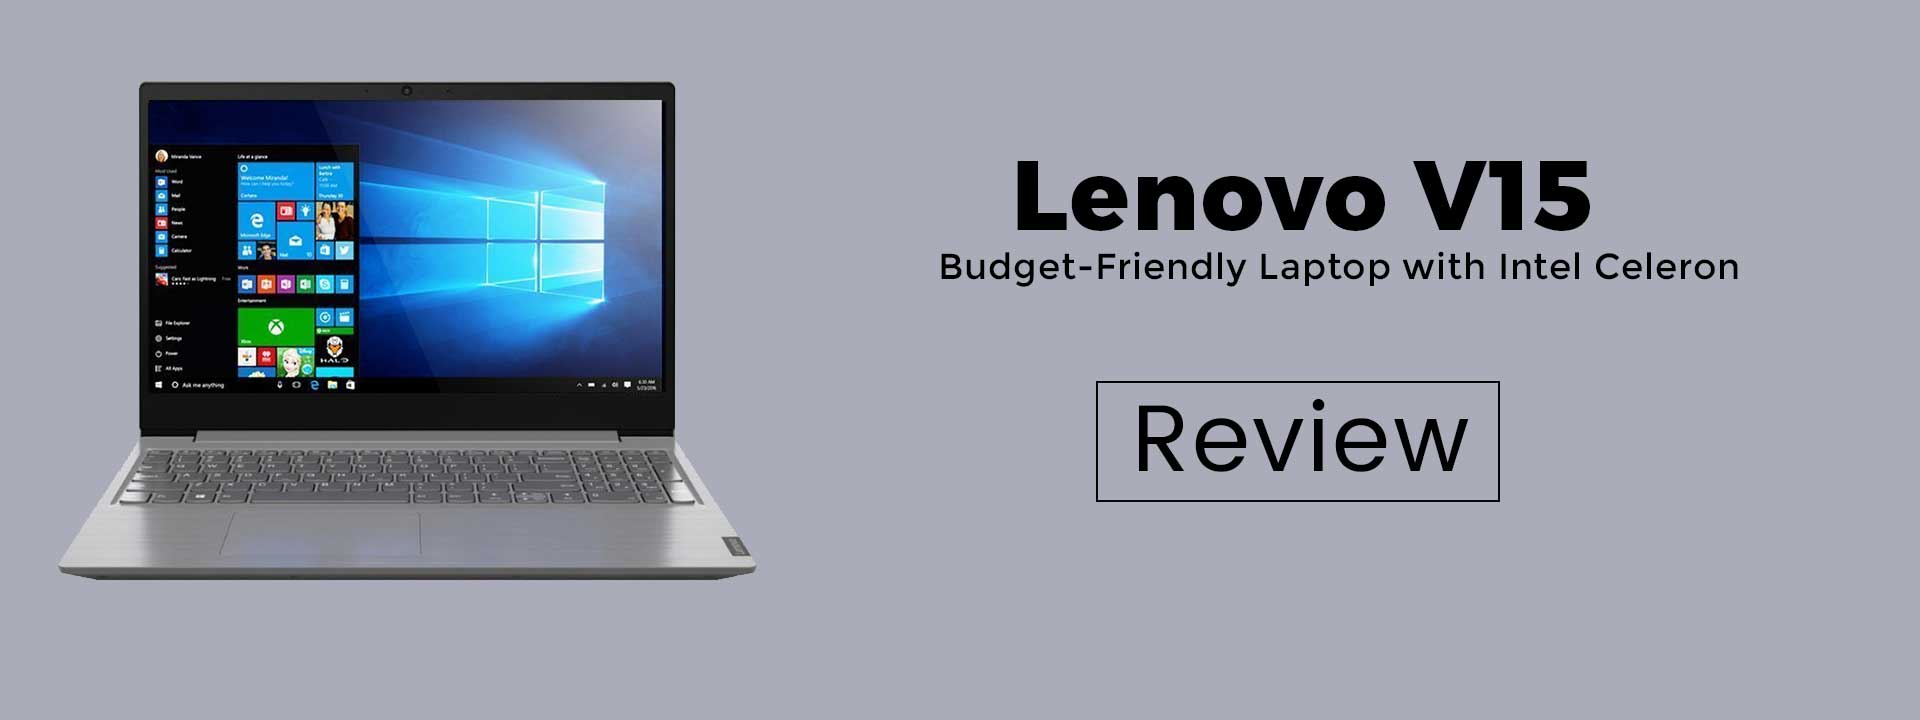 Lenovo V15: Budget-Friendly Laptop with Intel Celeron / 4GB RAM